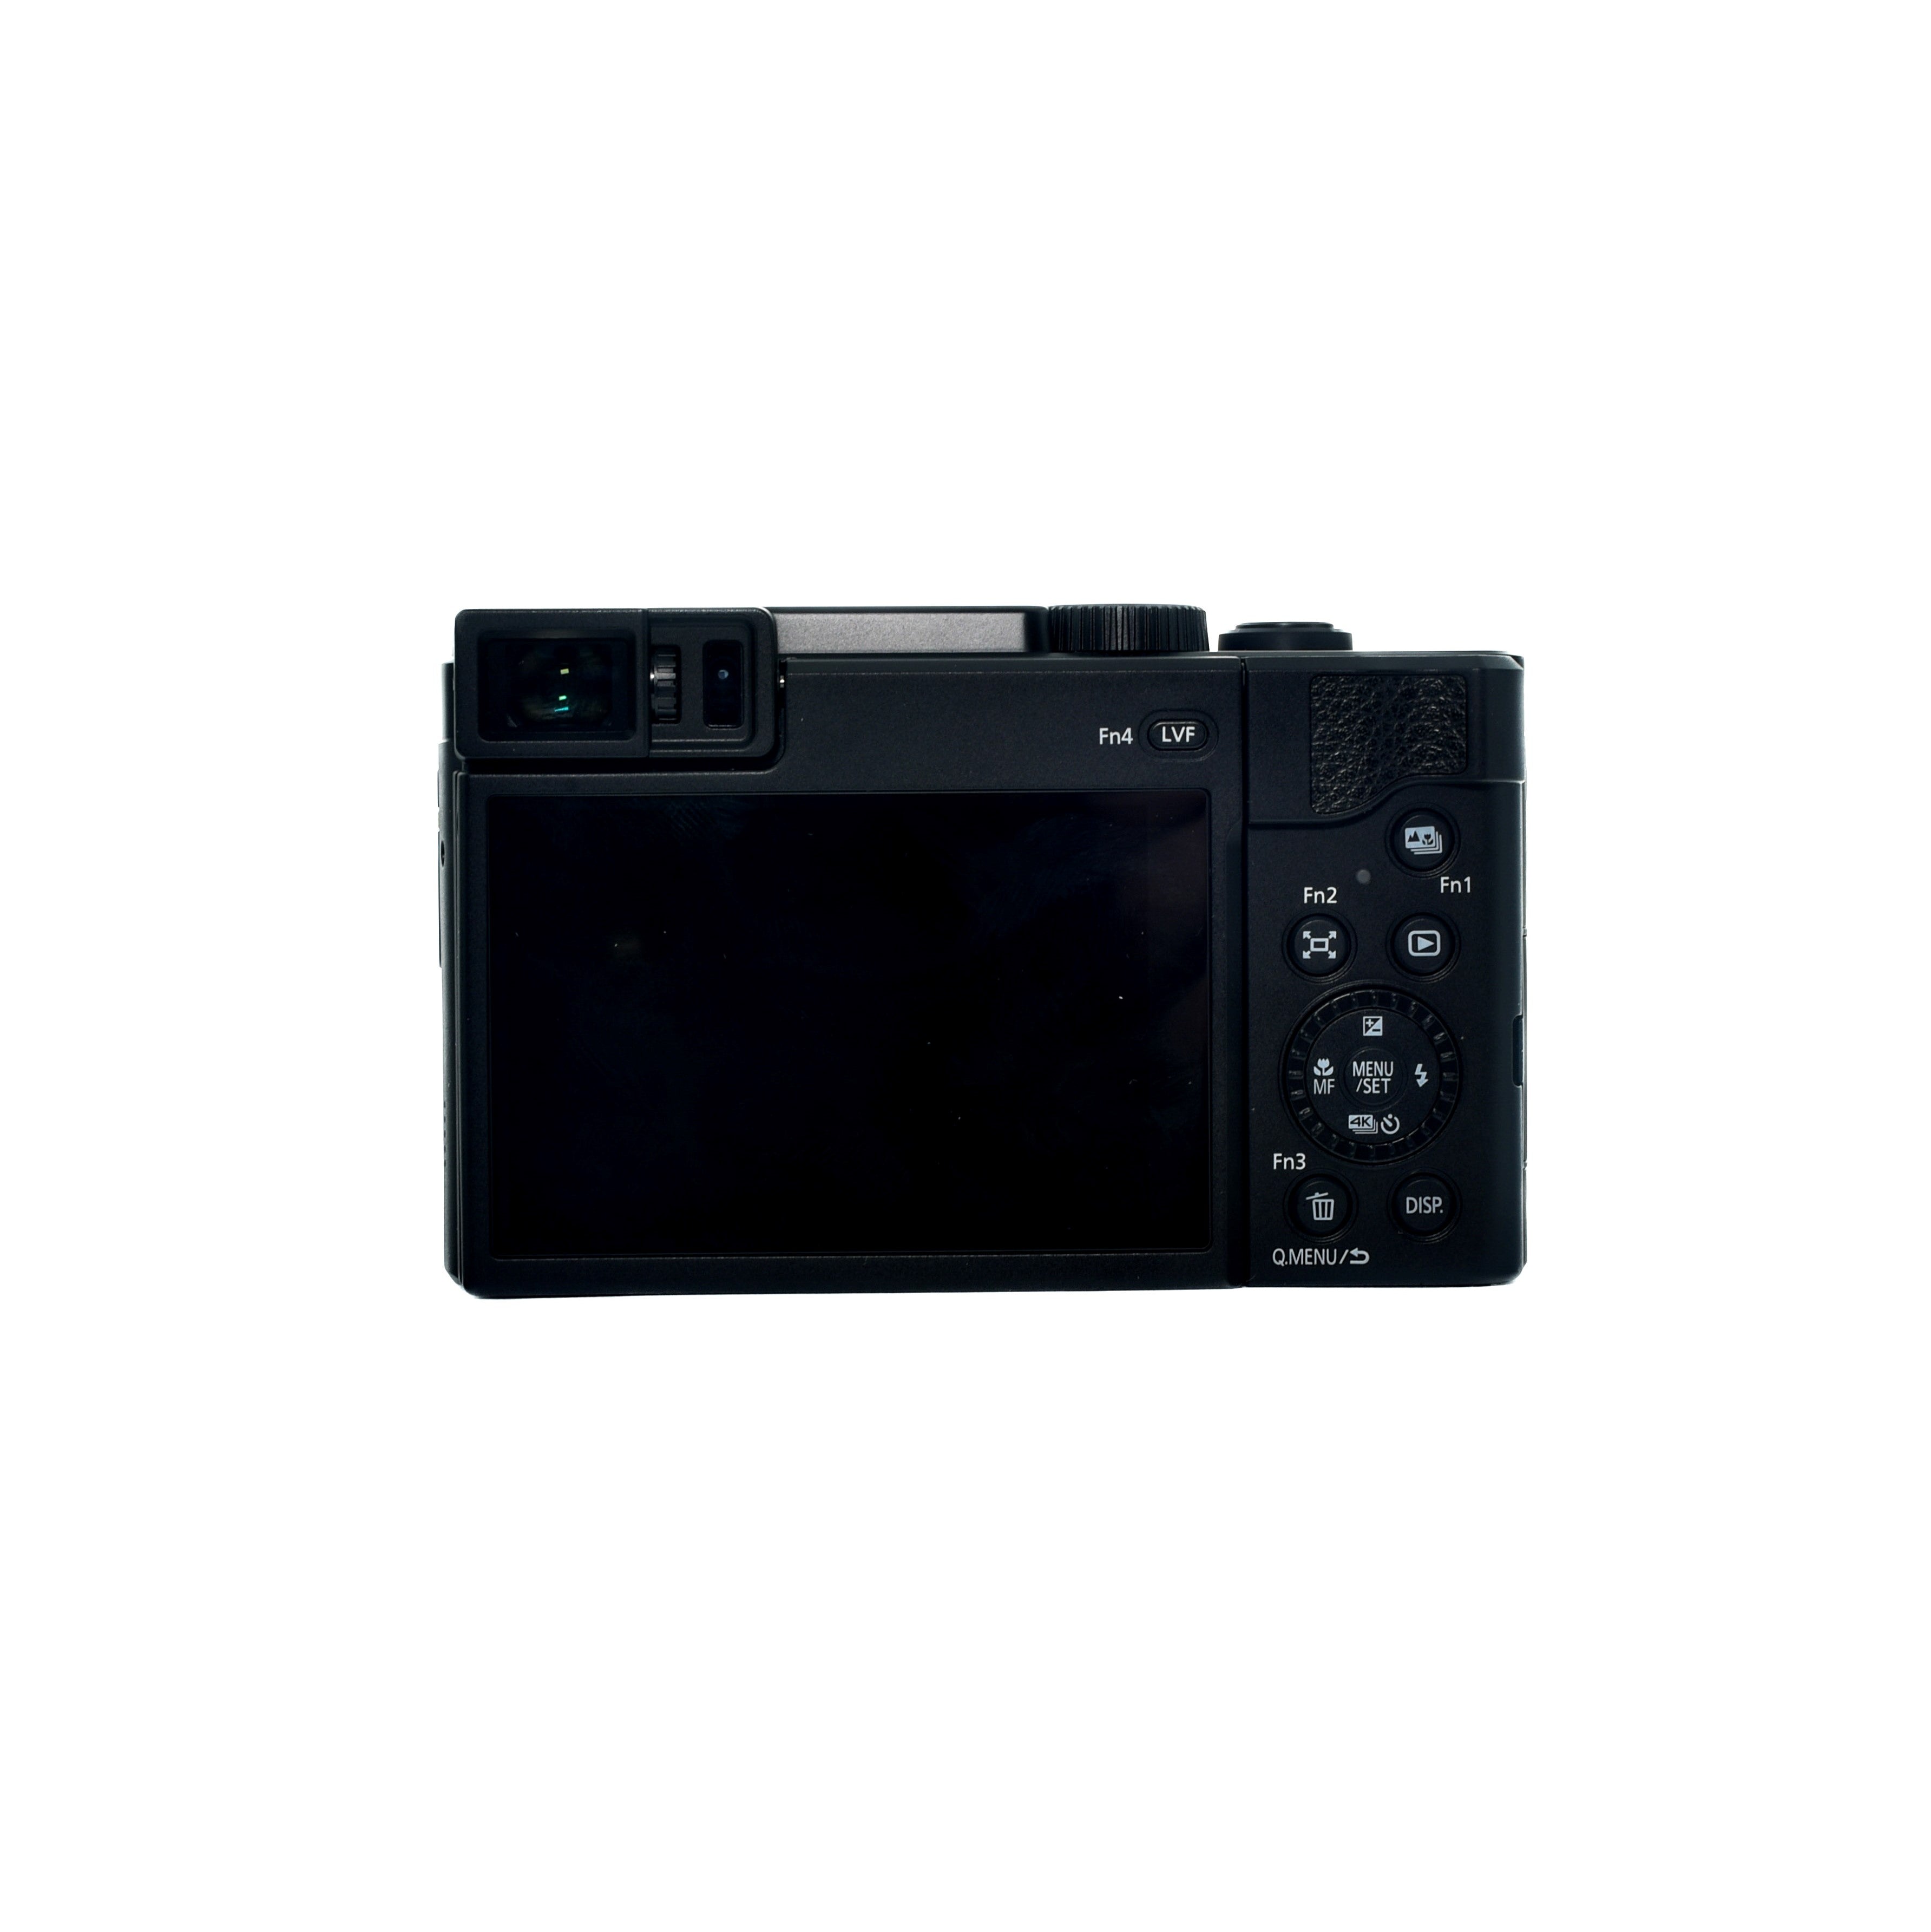 Panasonic Lumix DMC-TZ95D Compact Camera